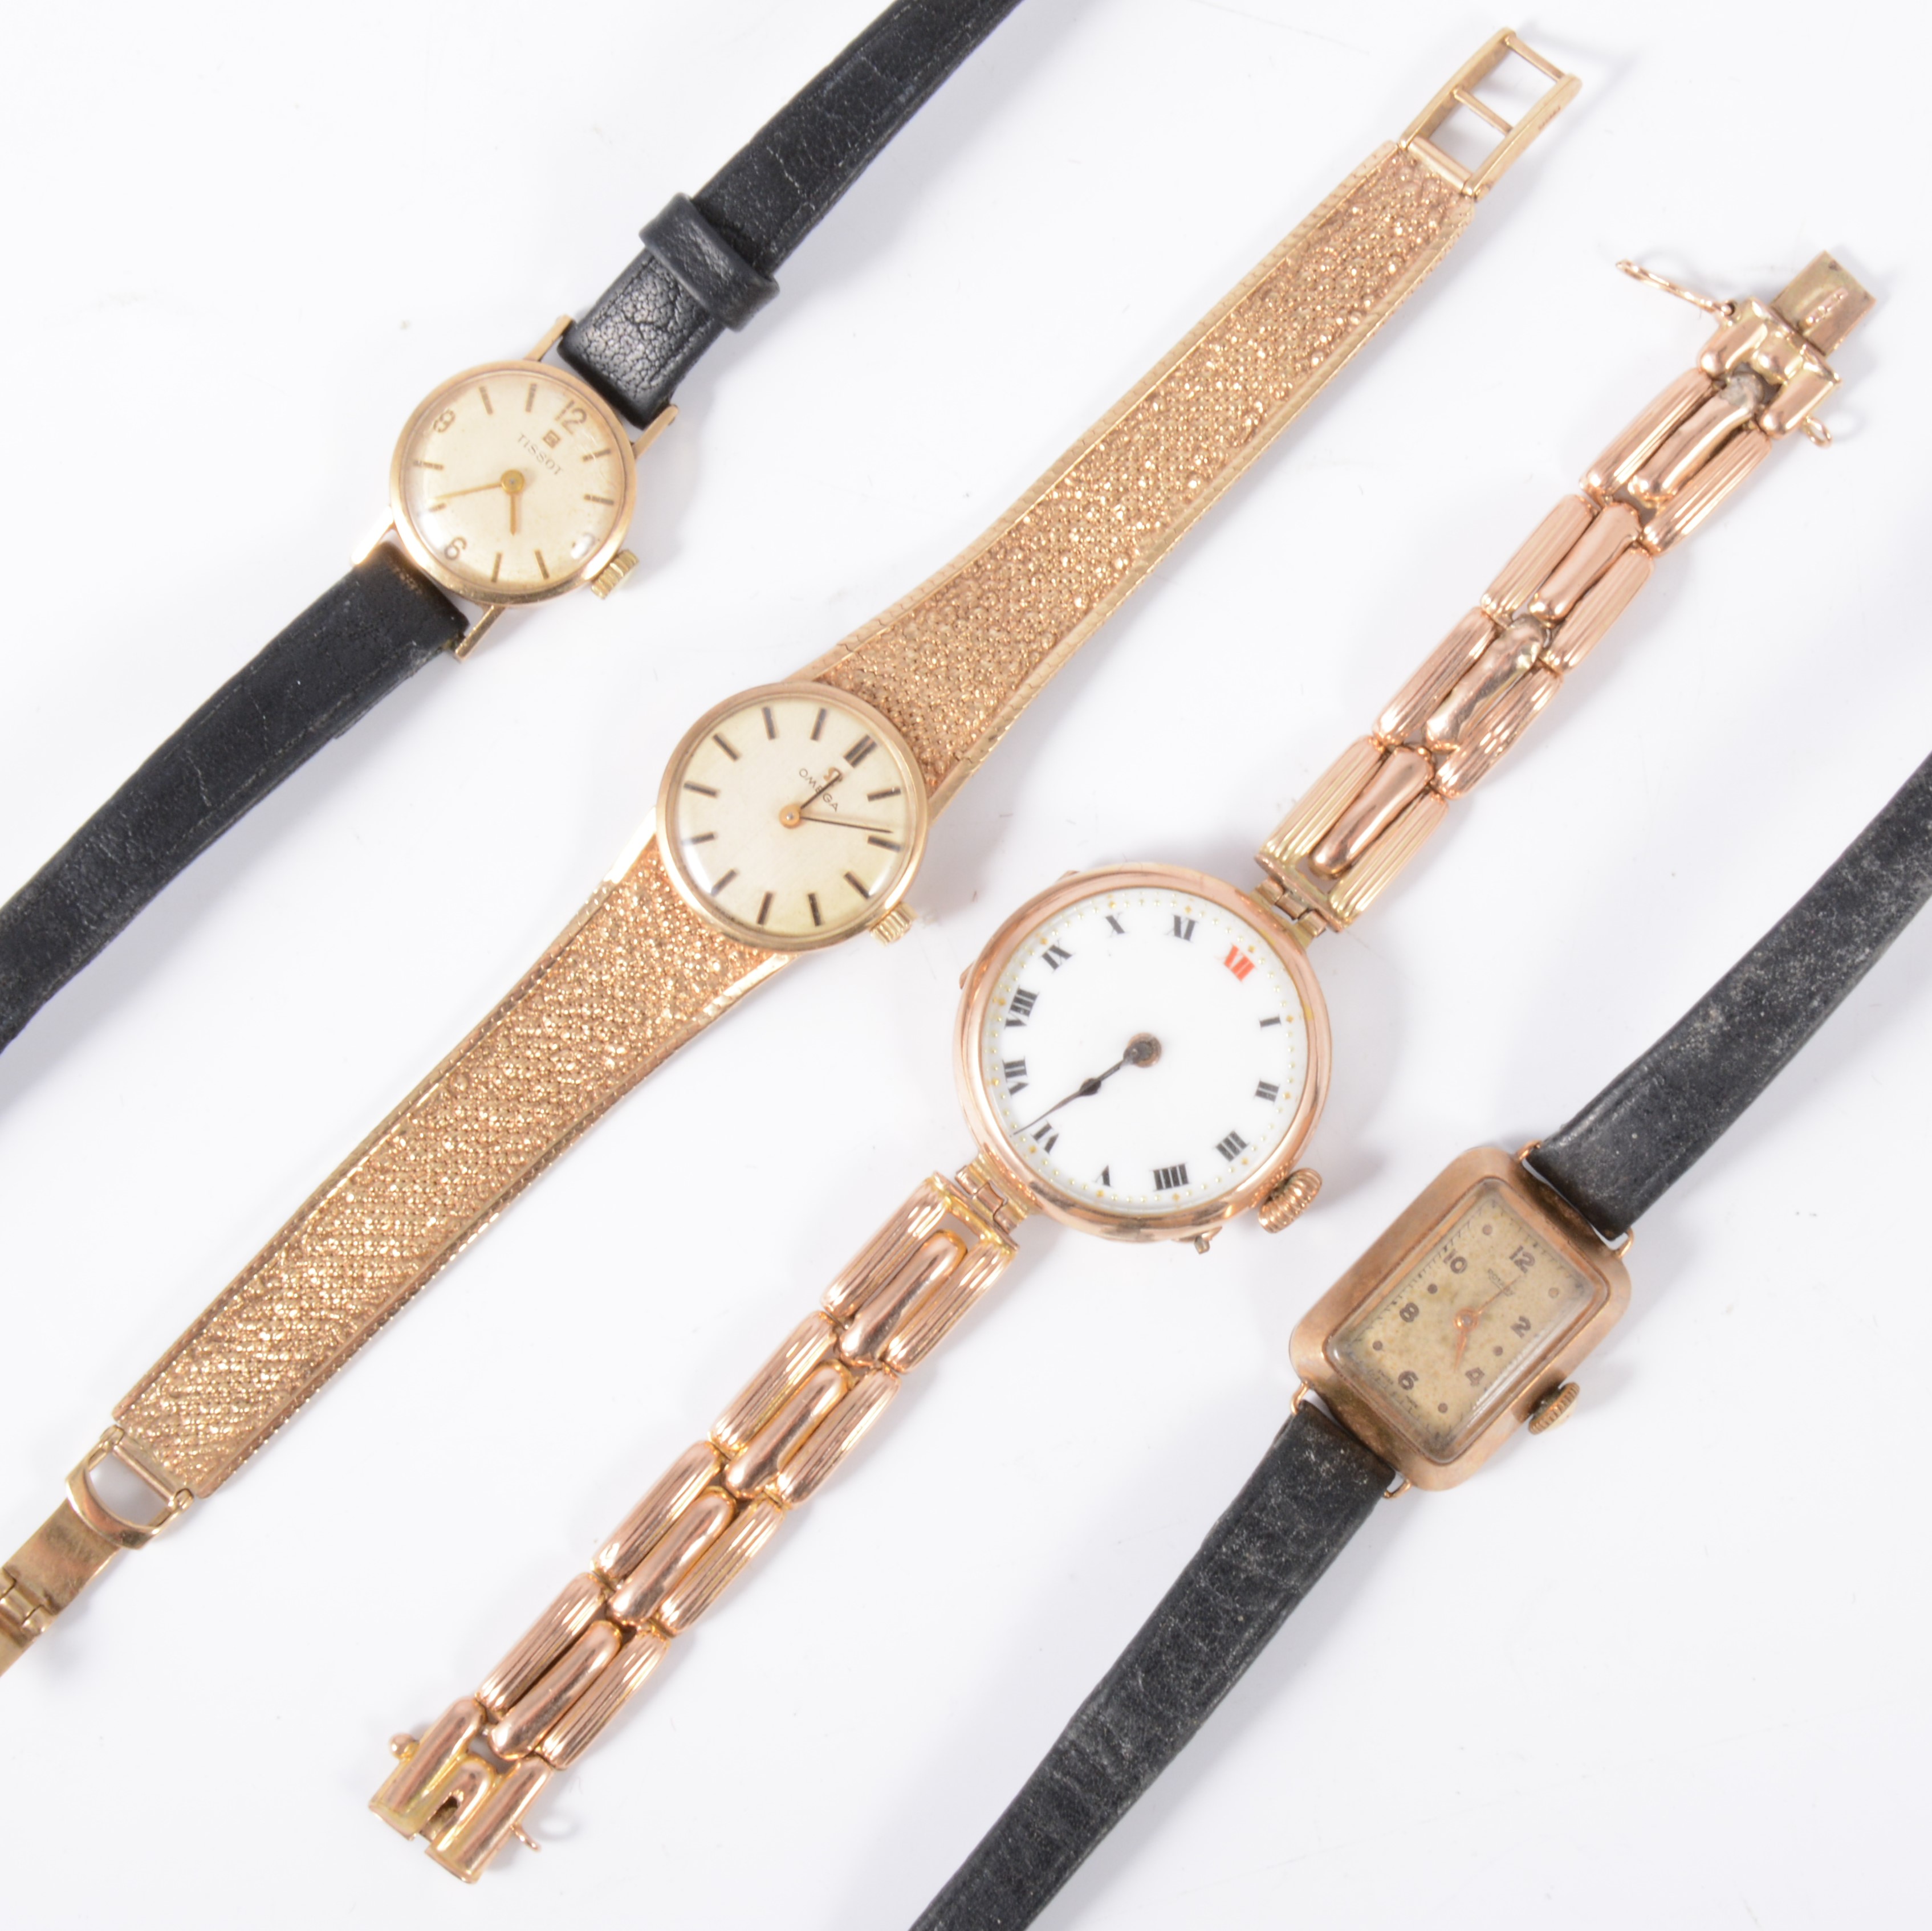 Four lady's wrist watches,